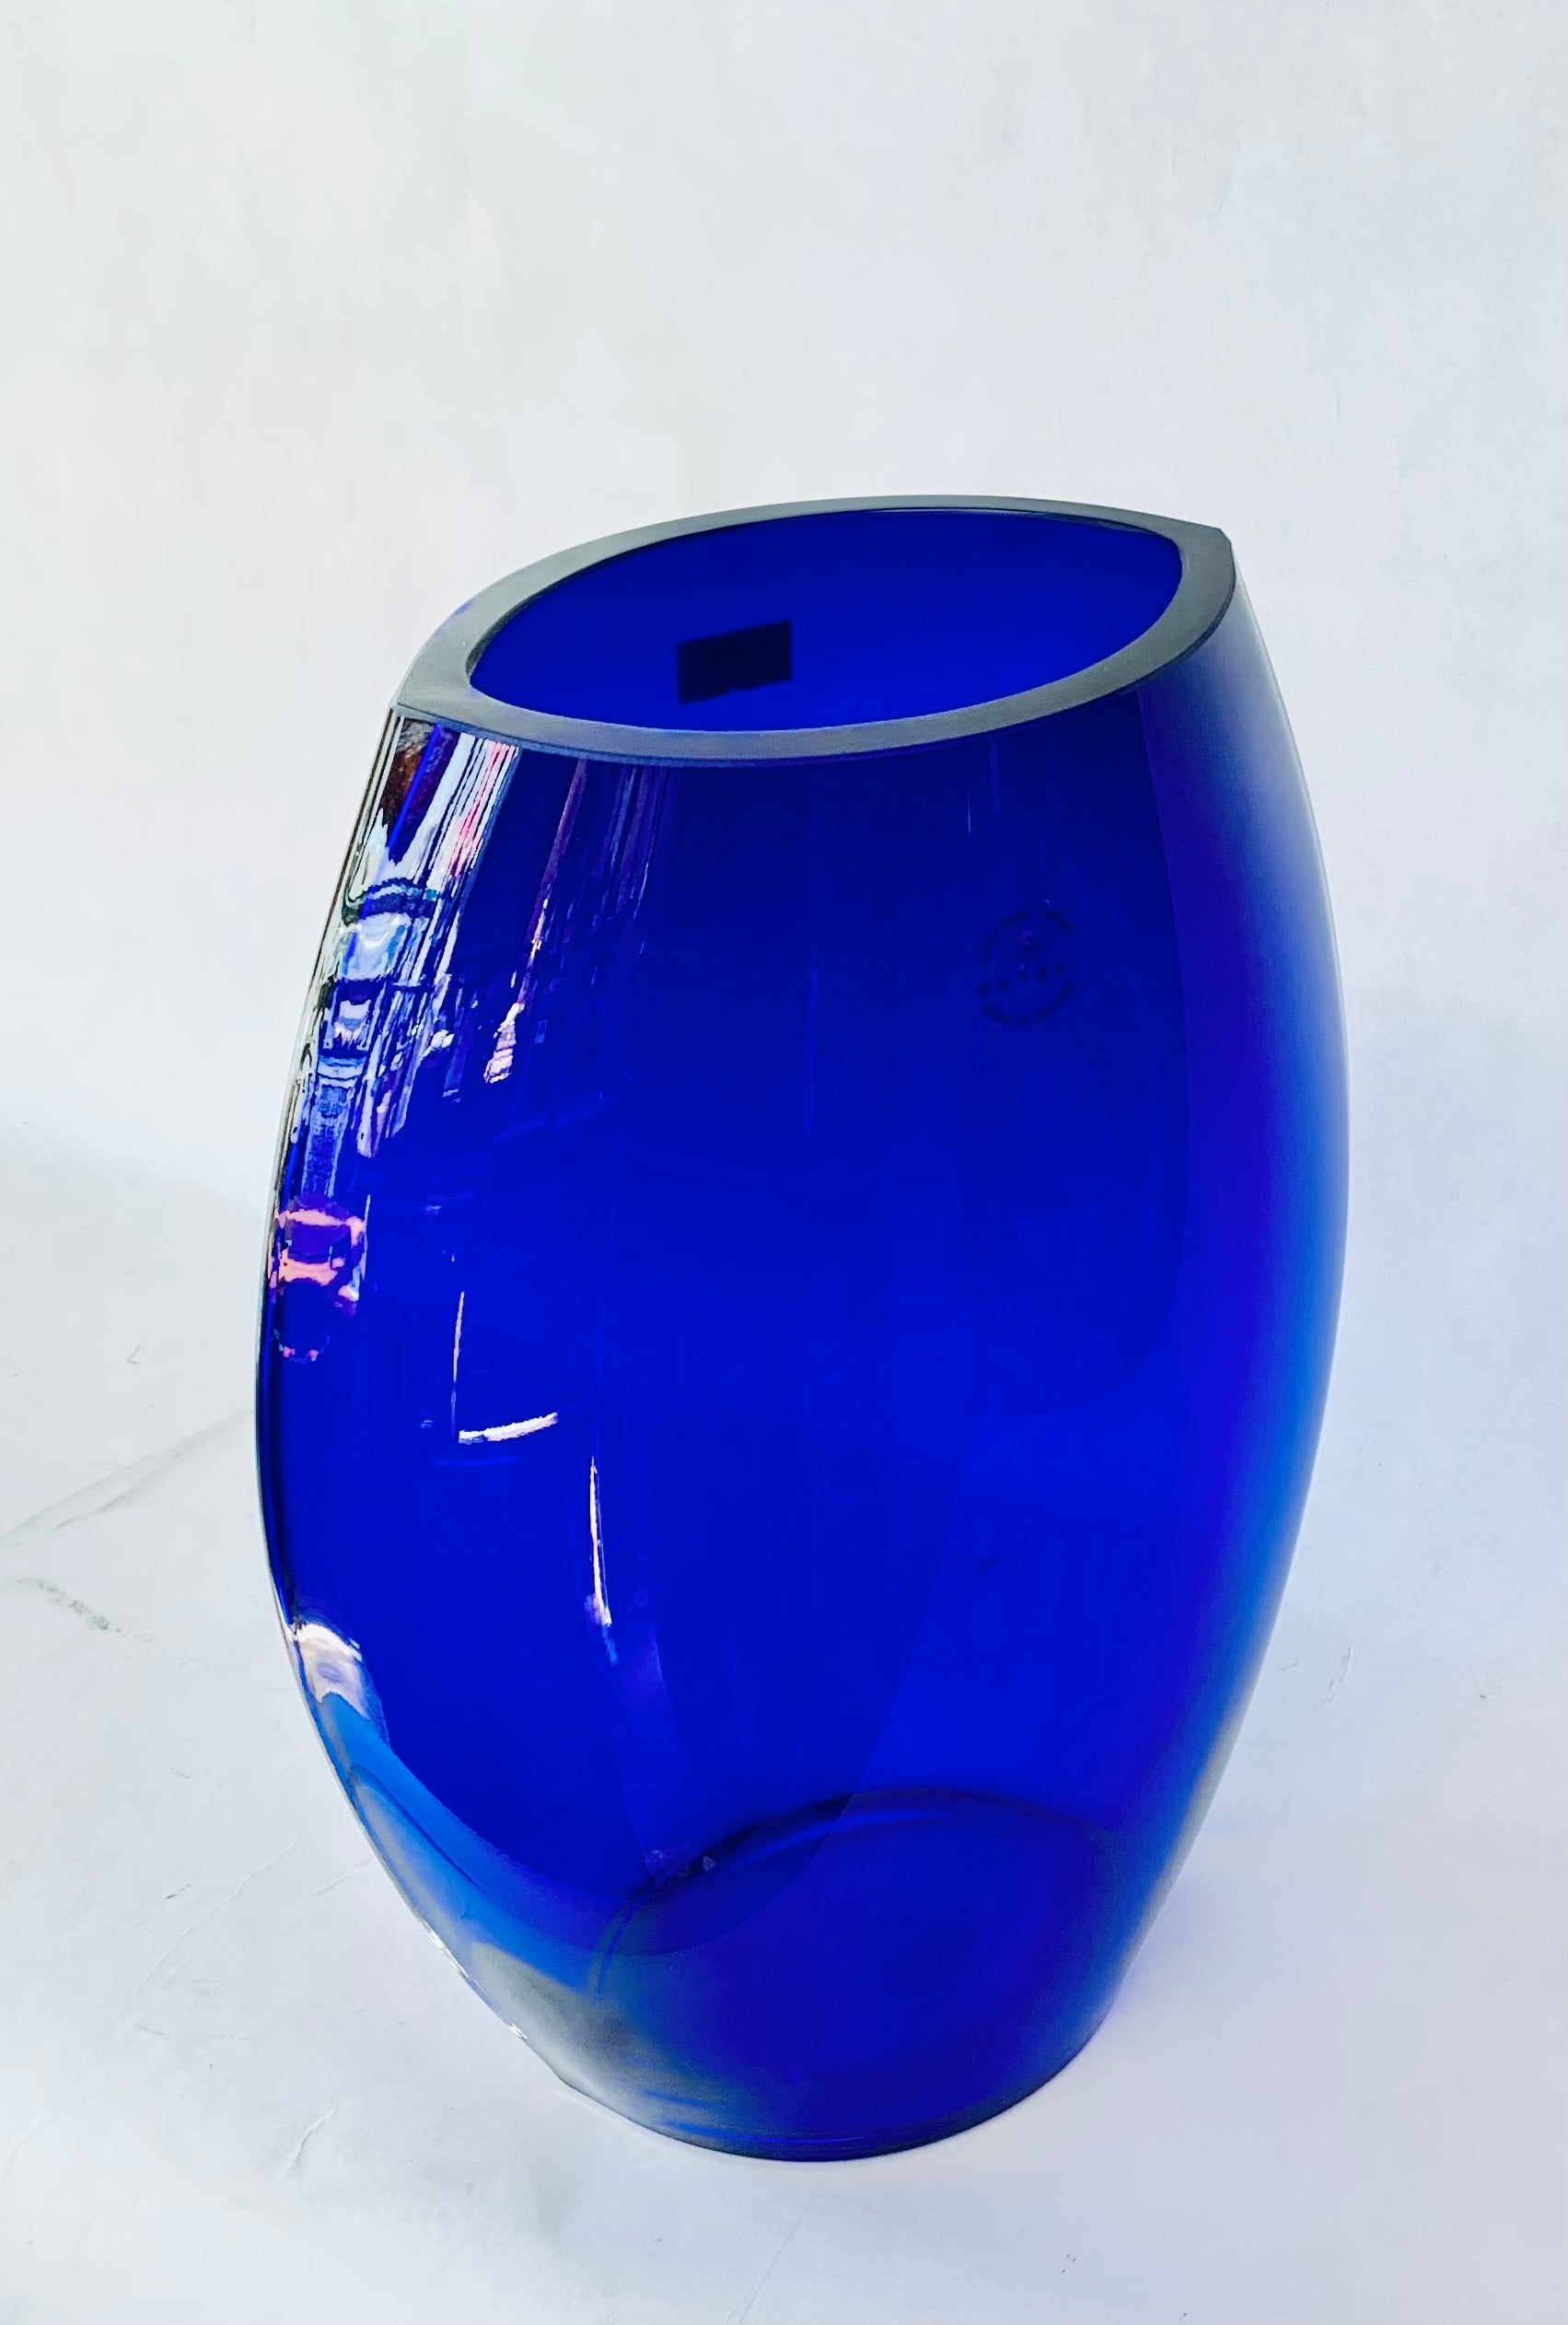 Cobalt Blue Crystal Vase 12"tall X 9"wide X 5"deep Barski Crystal collection